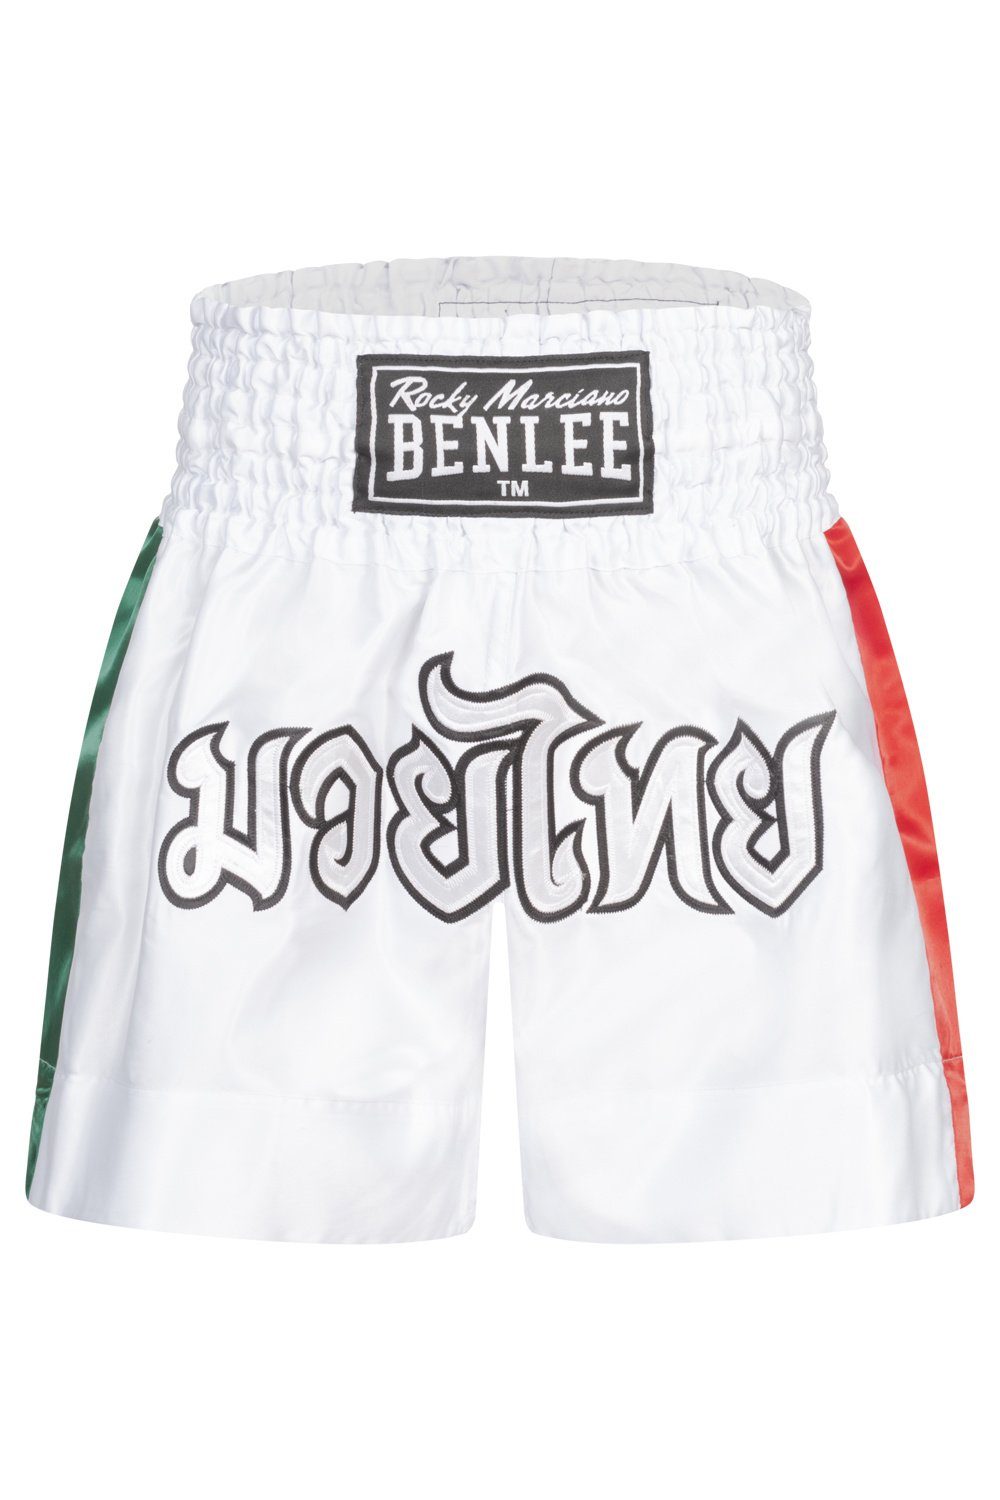 Benlee Rocky Marciano Sporthose Benlee Herren Boxshorts Thai Goldy white/green/red